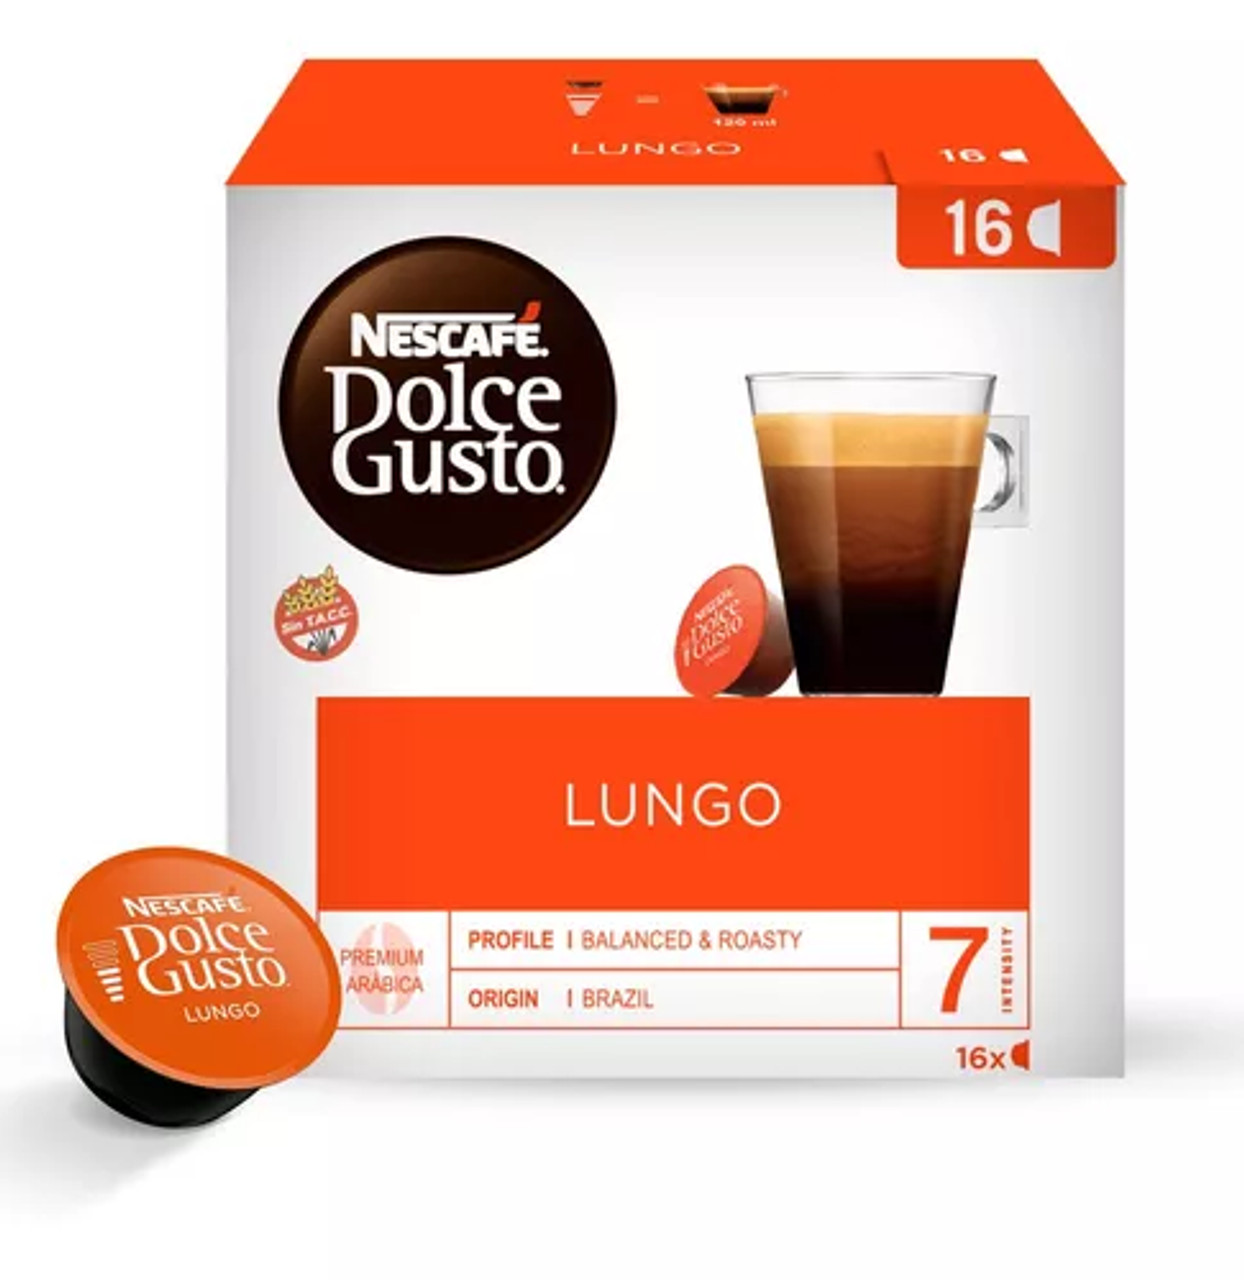 Cápsulas Dolce Gusto® Nescafé® - Espresso Intenso - 16 unidades